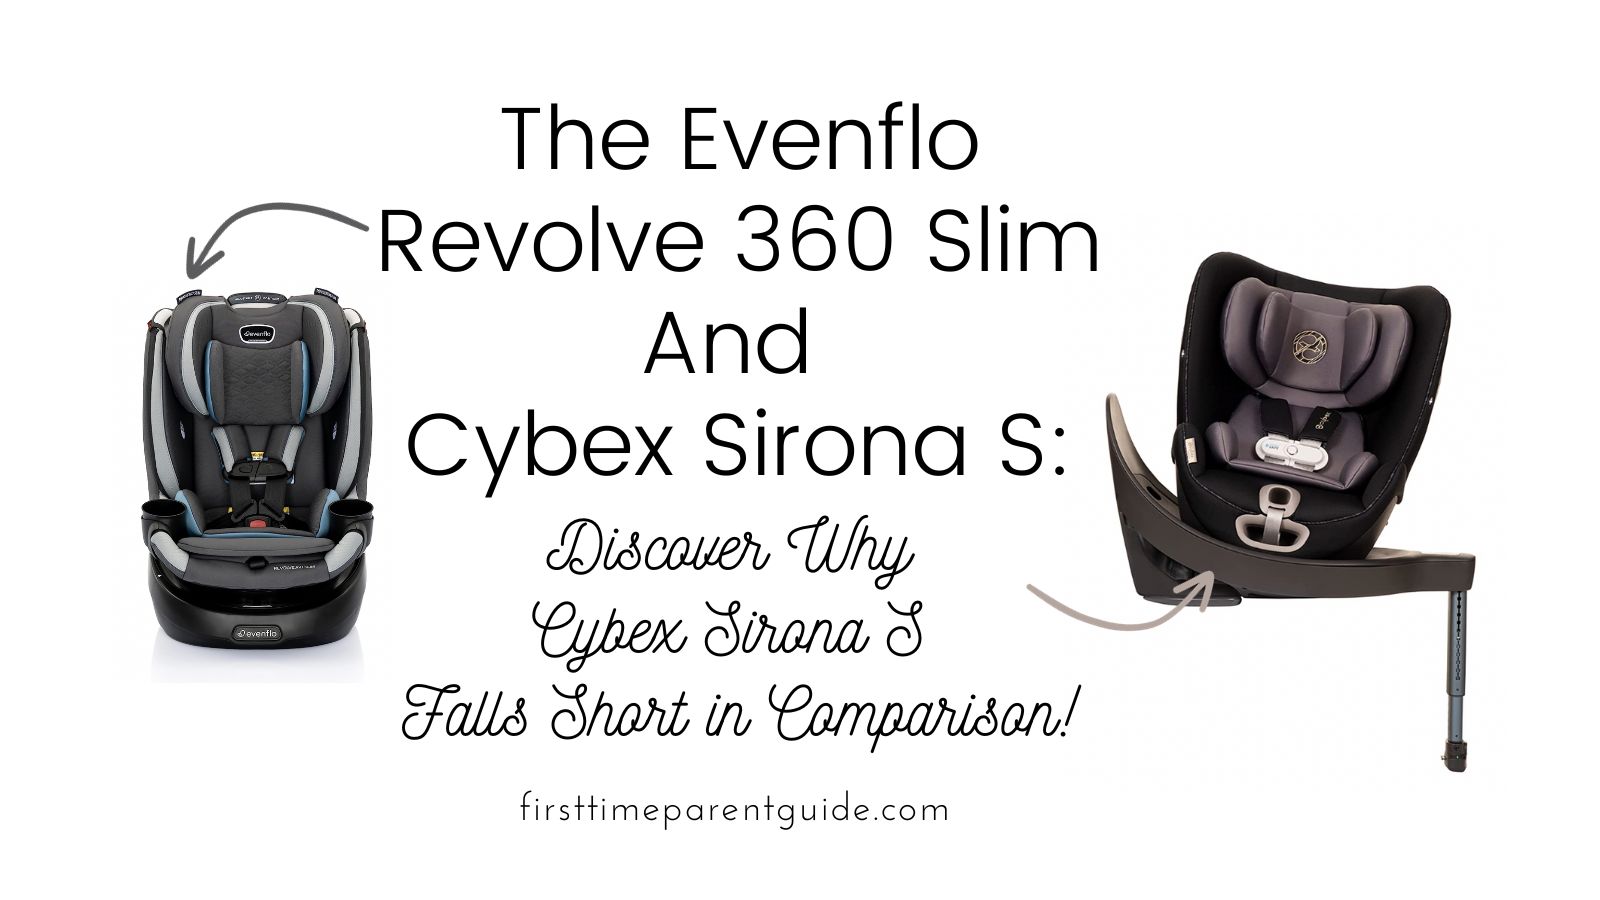 The Evenflo Revolve 360 Slim And